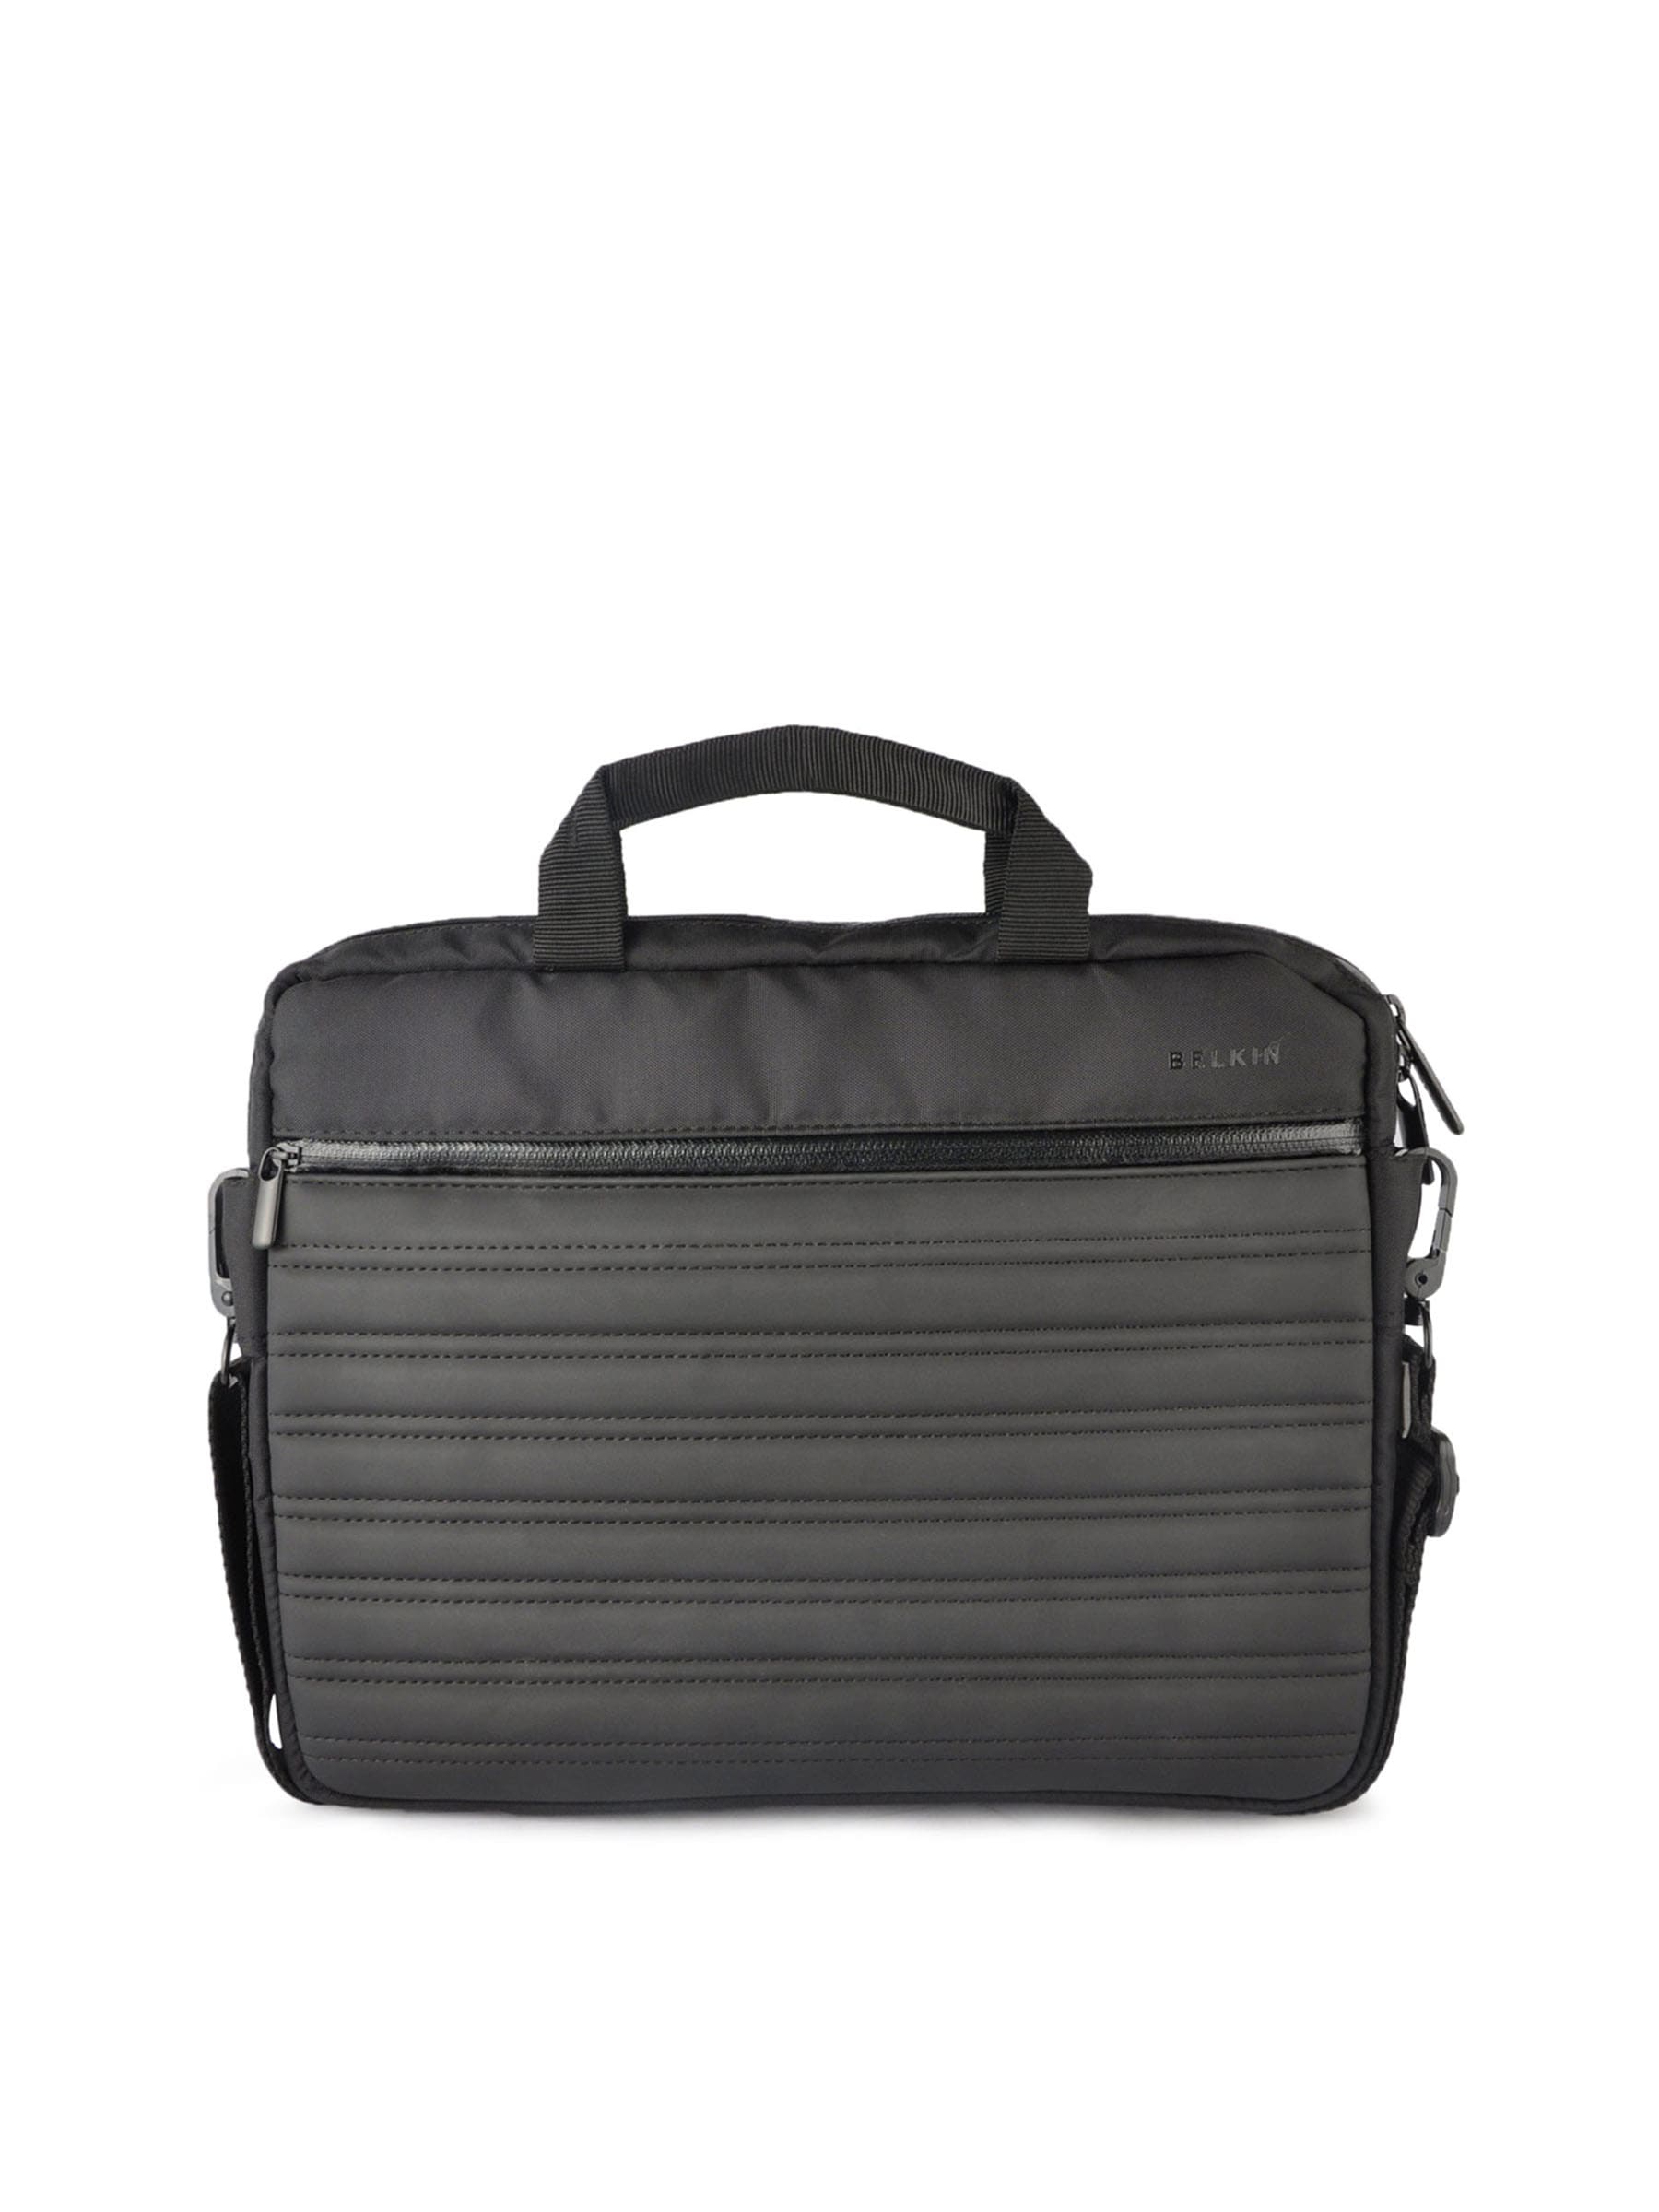 Belkin Unisex Netbook Stealth Slip Case Black Handbags